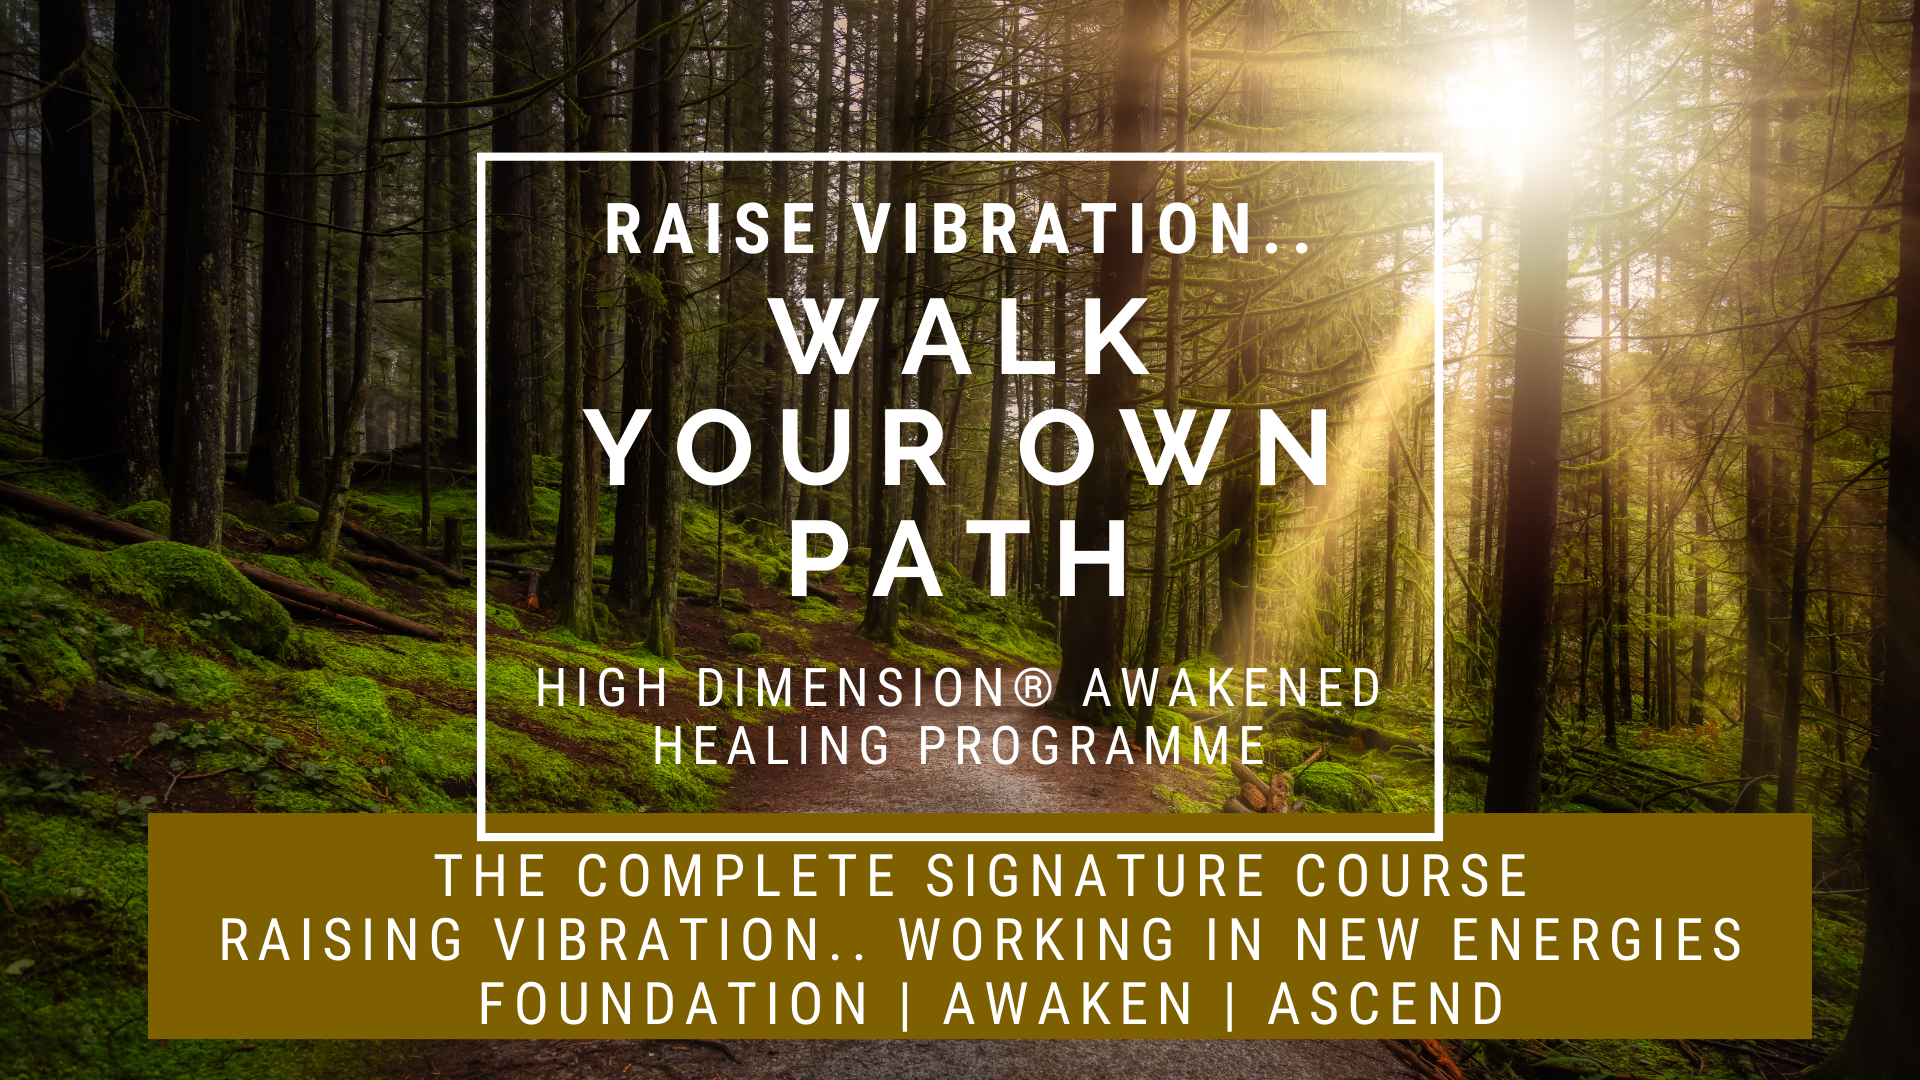 High Dimension® Awaken & Healing Programme